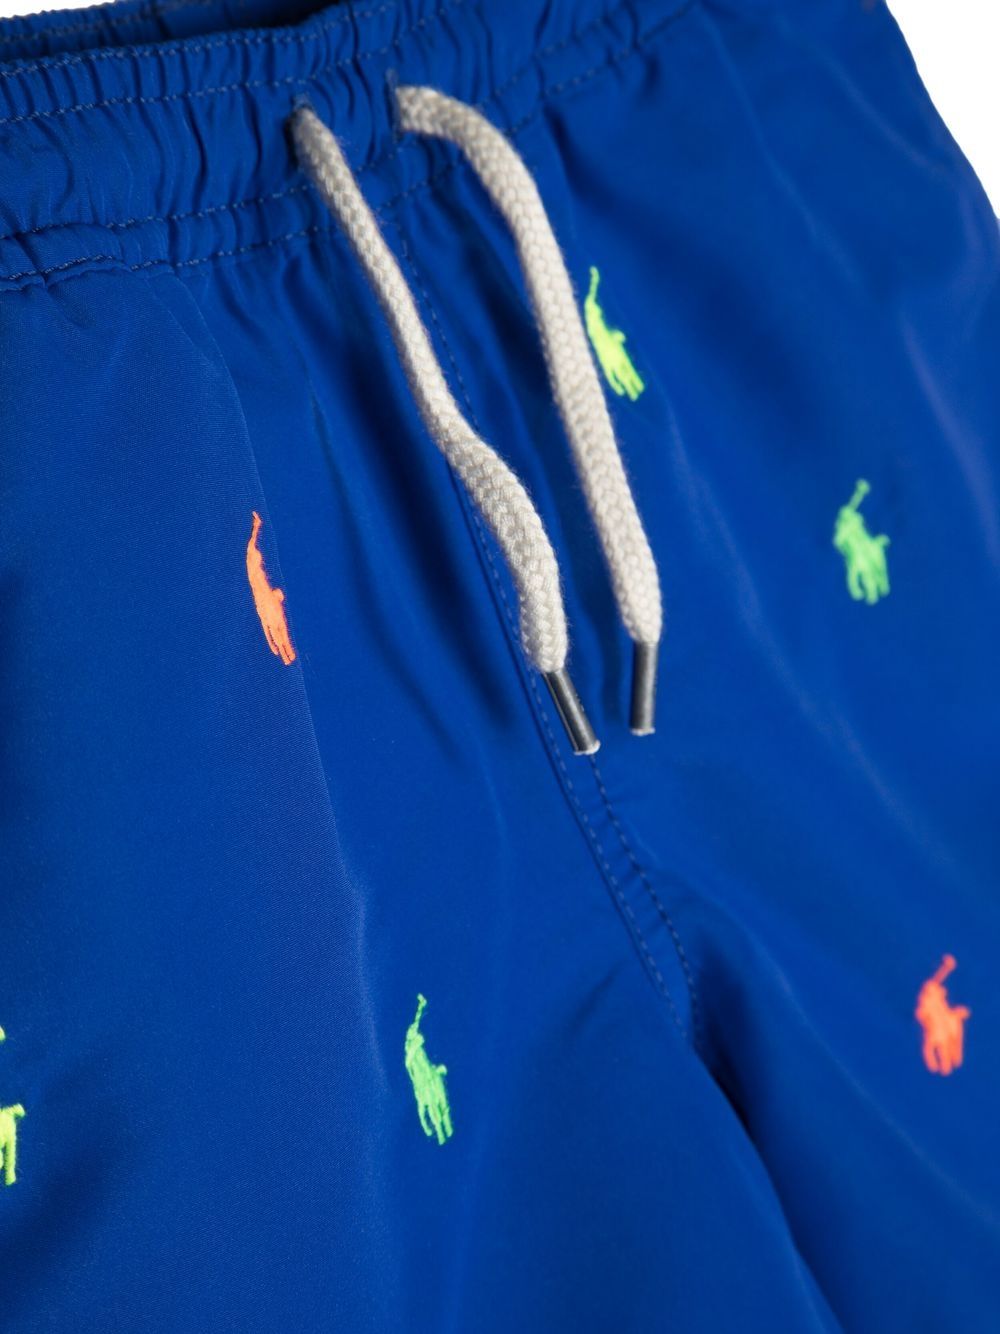 Embroidered Pony swim shorts